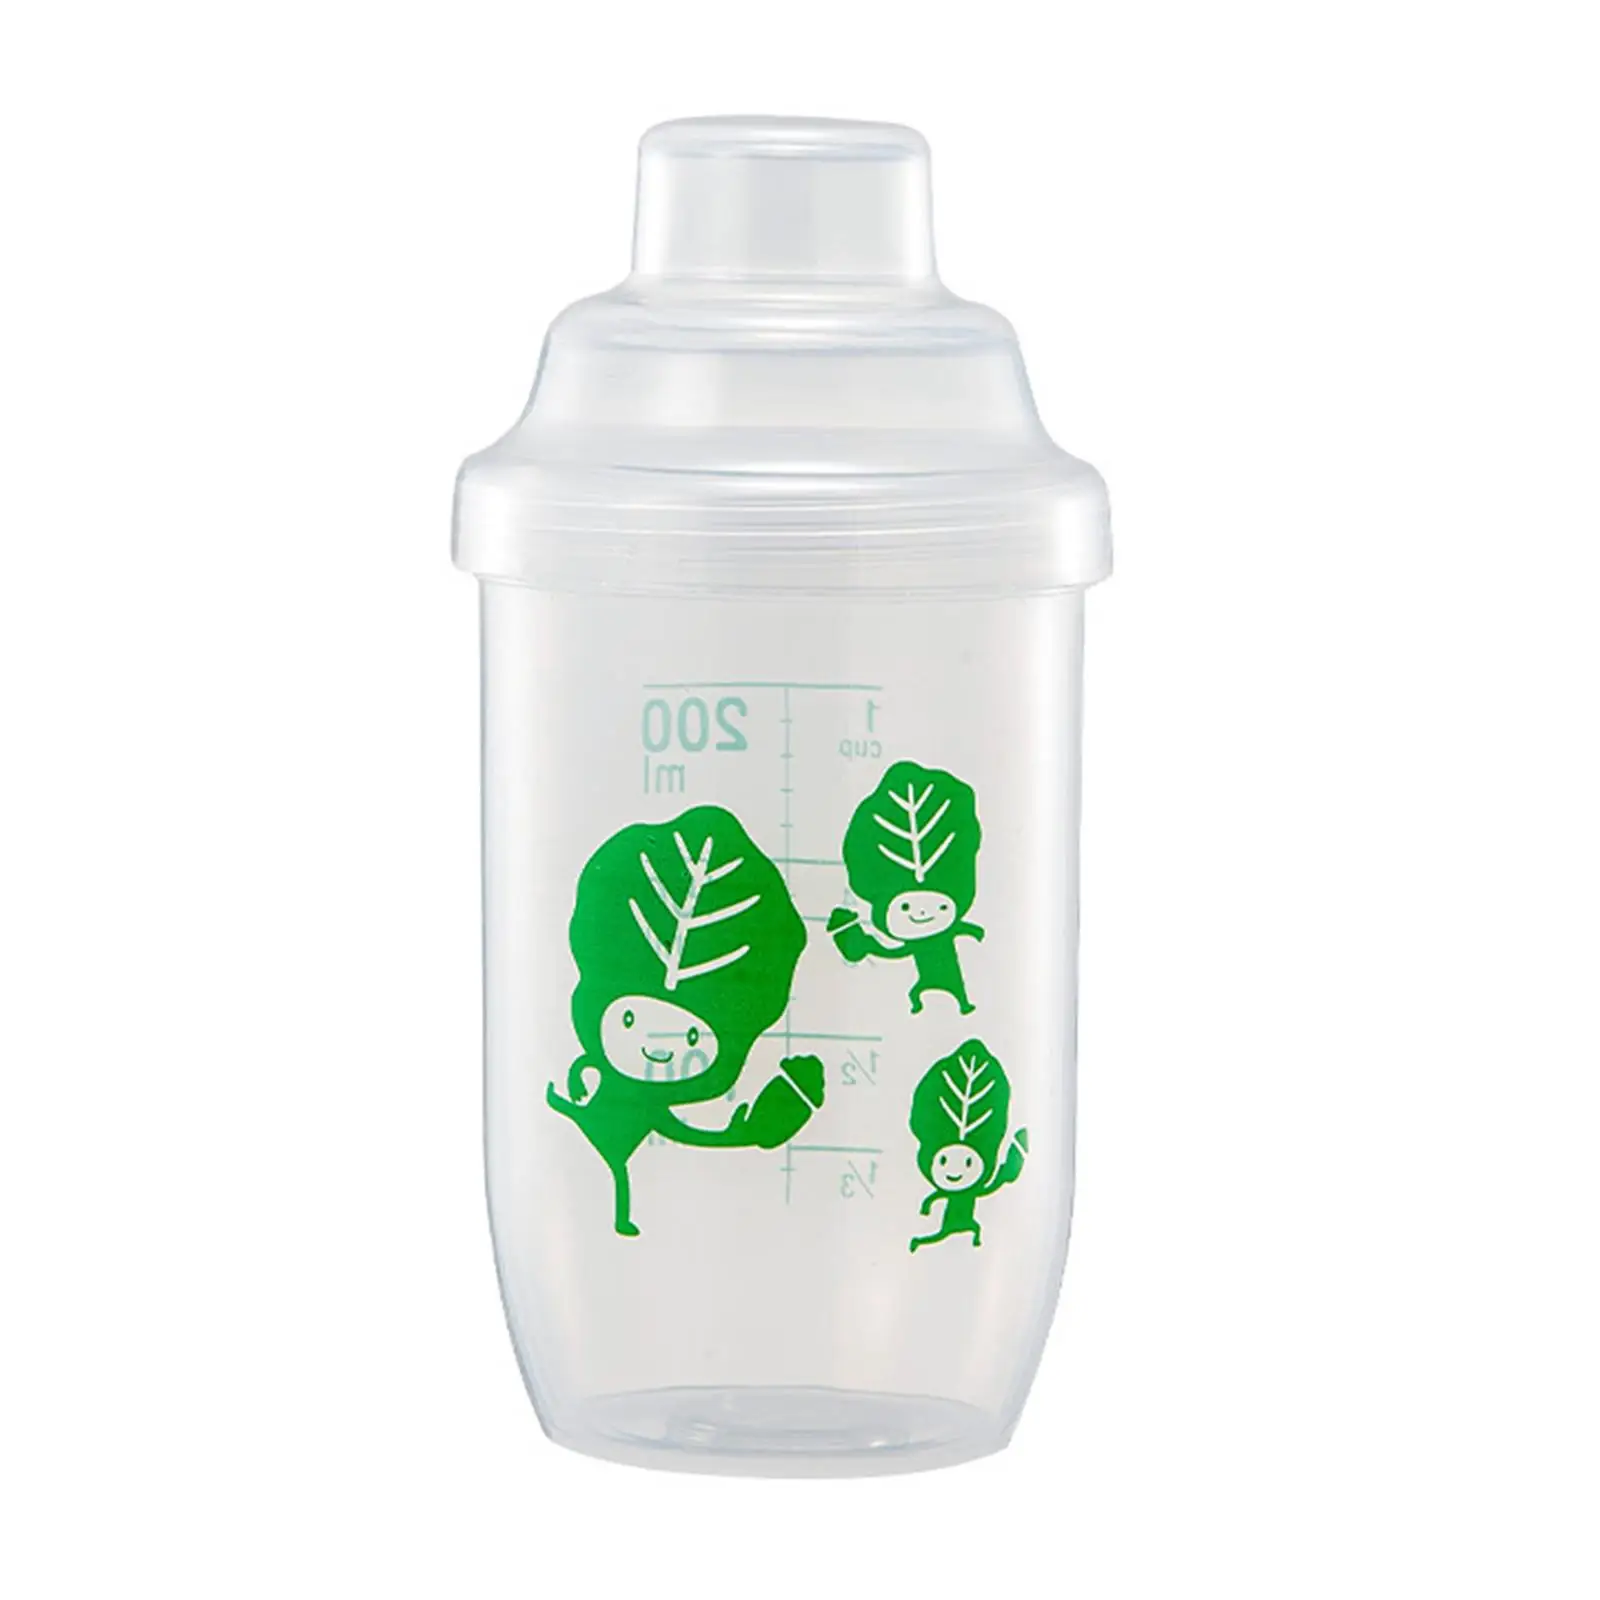 Shaker Bottle Multifunctional Mixing Cup Scale Marks 200ml Mixer Bottle Milkshake Cup for Milk Water Milkshakes Workout